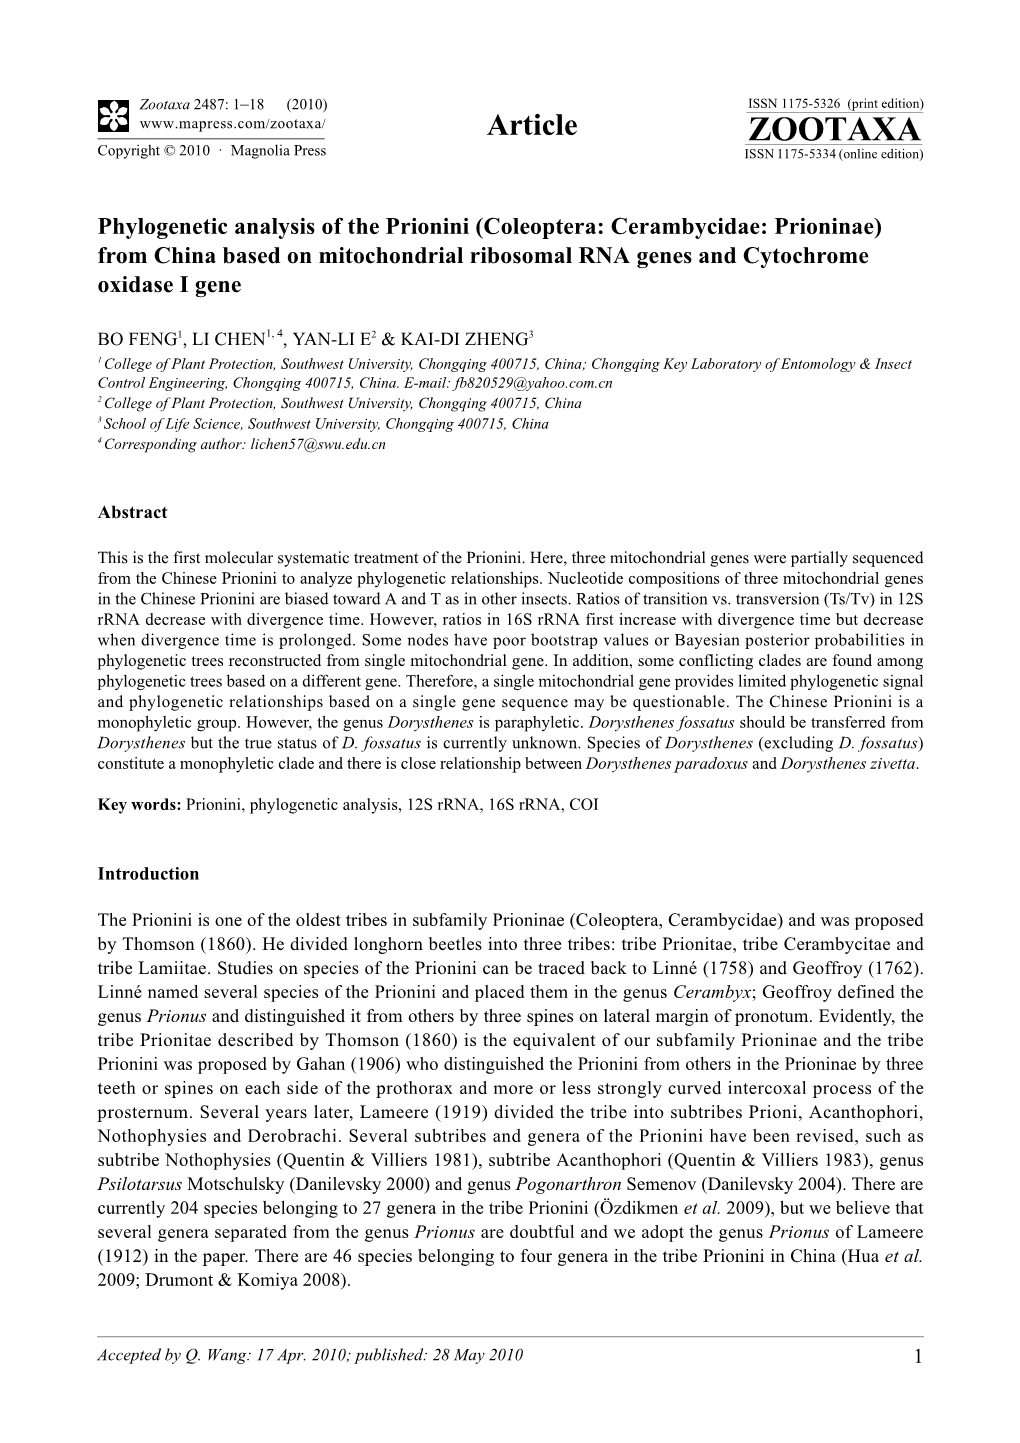 Zootaxa, Phylogenetic Analysis of the Prionini (Coleoptera